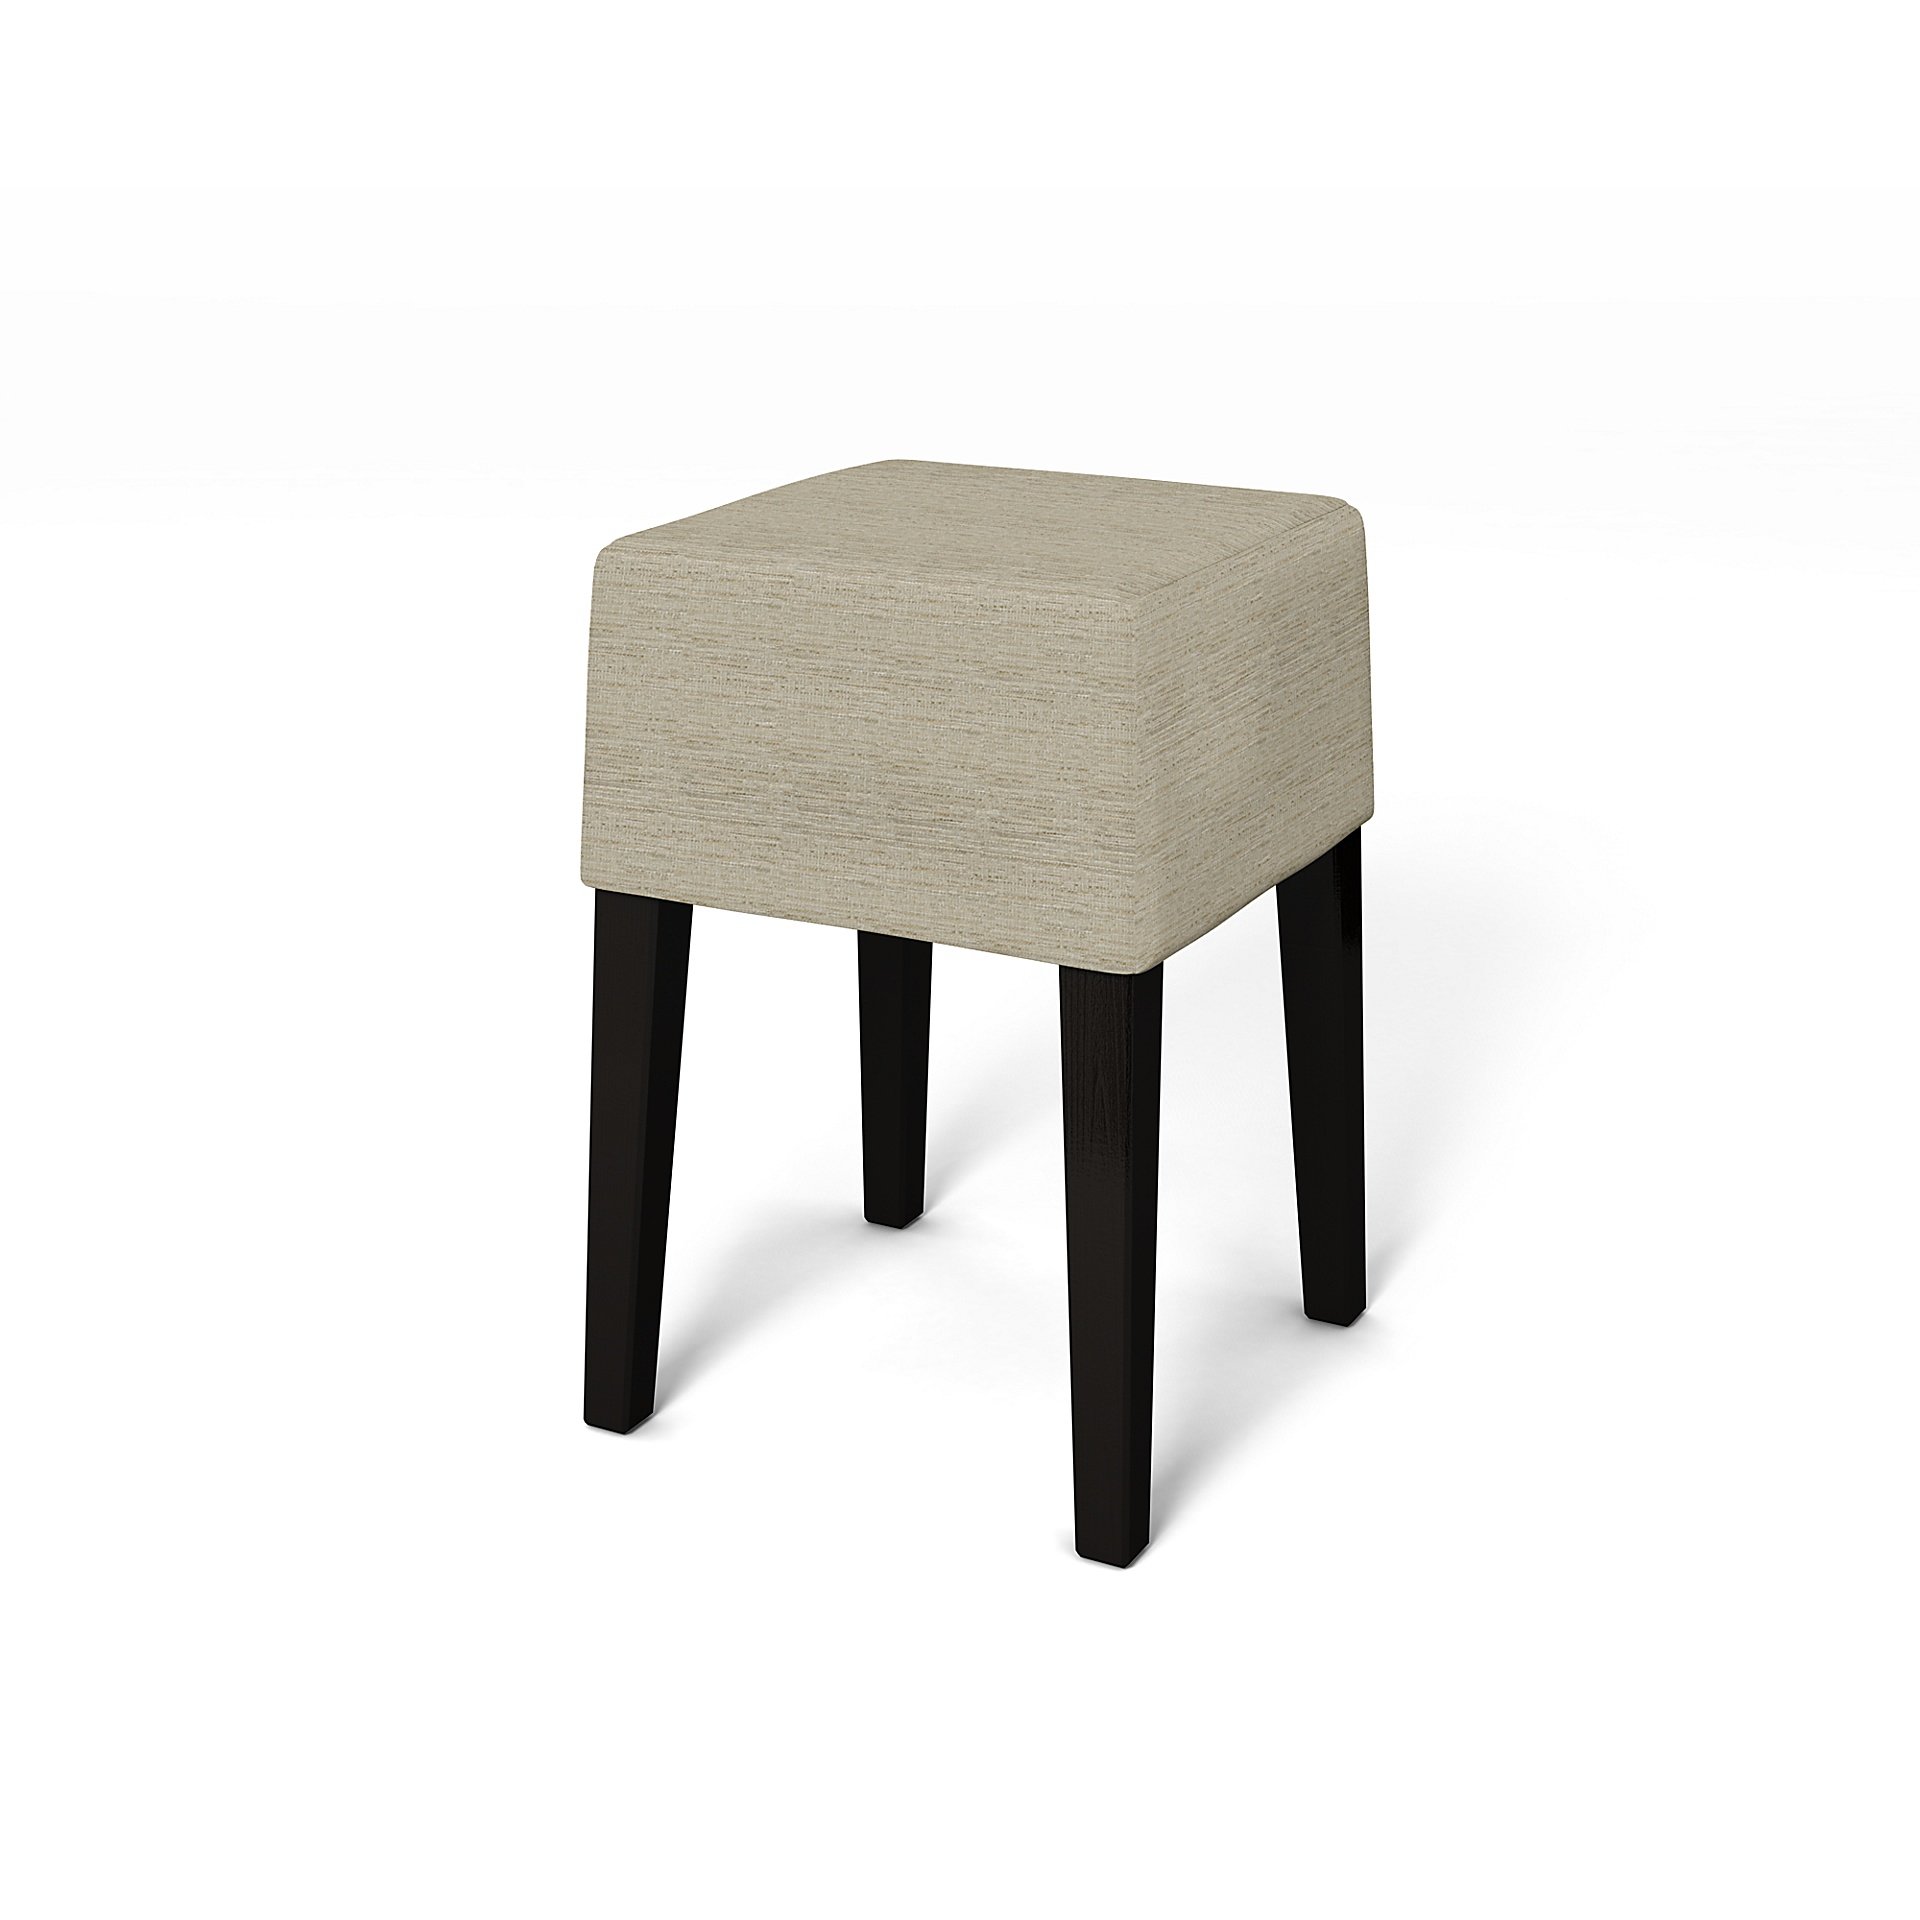 IKEA - Nils Stool Cover, Light Sand, Boucle & Texture - Bemz